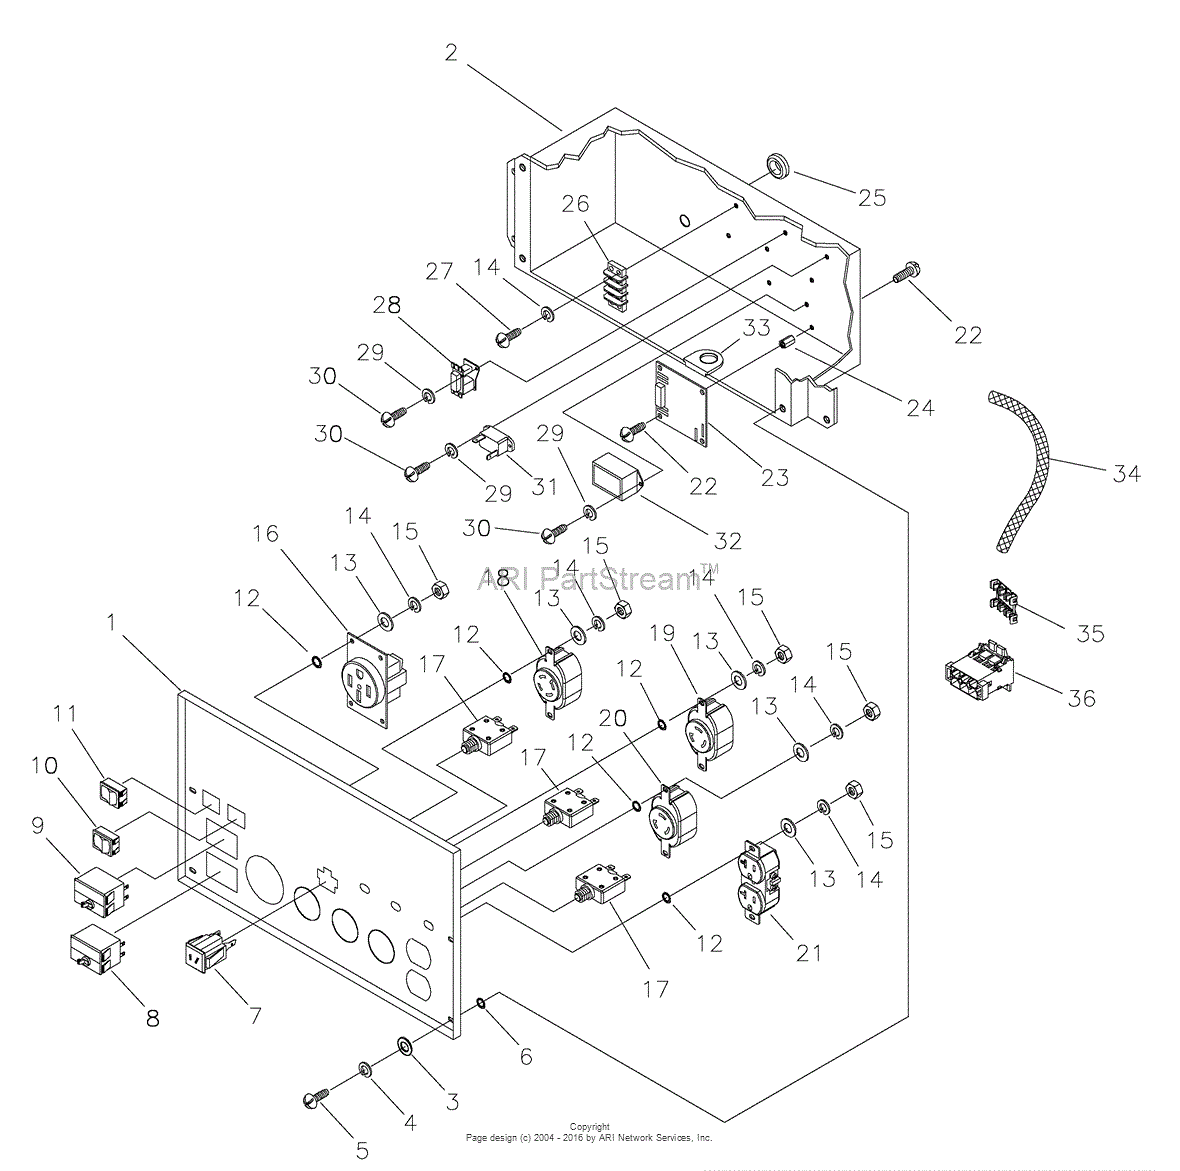 wiring diagram for flathead briggs model 422437